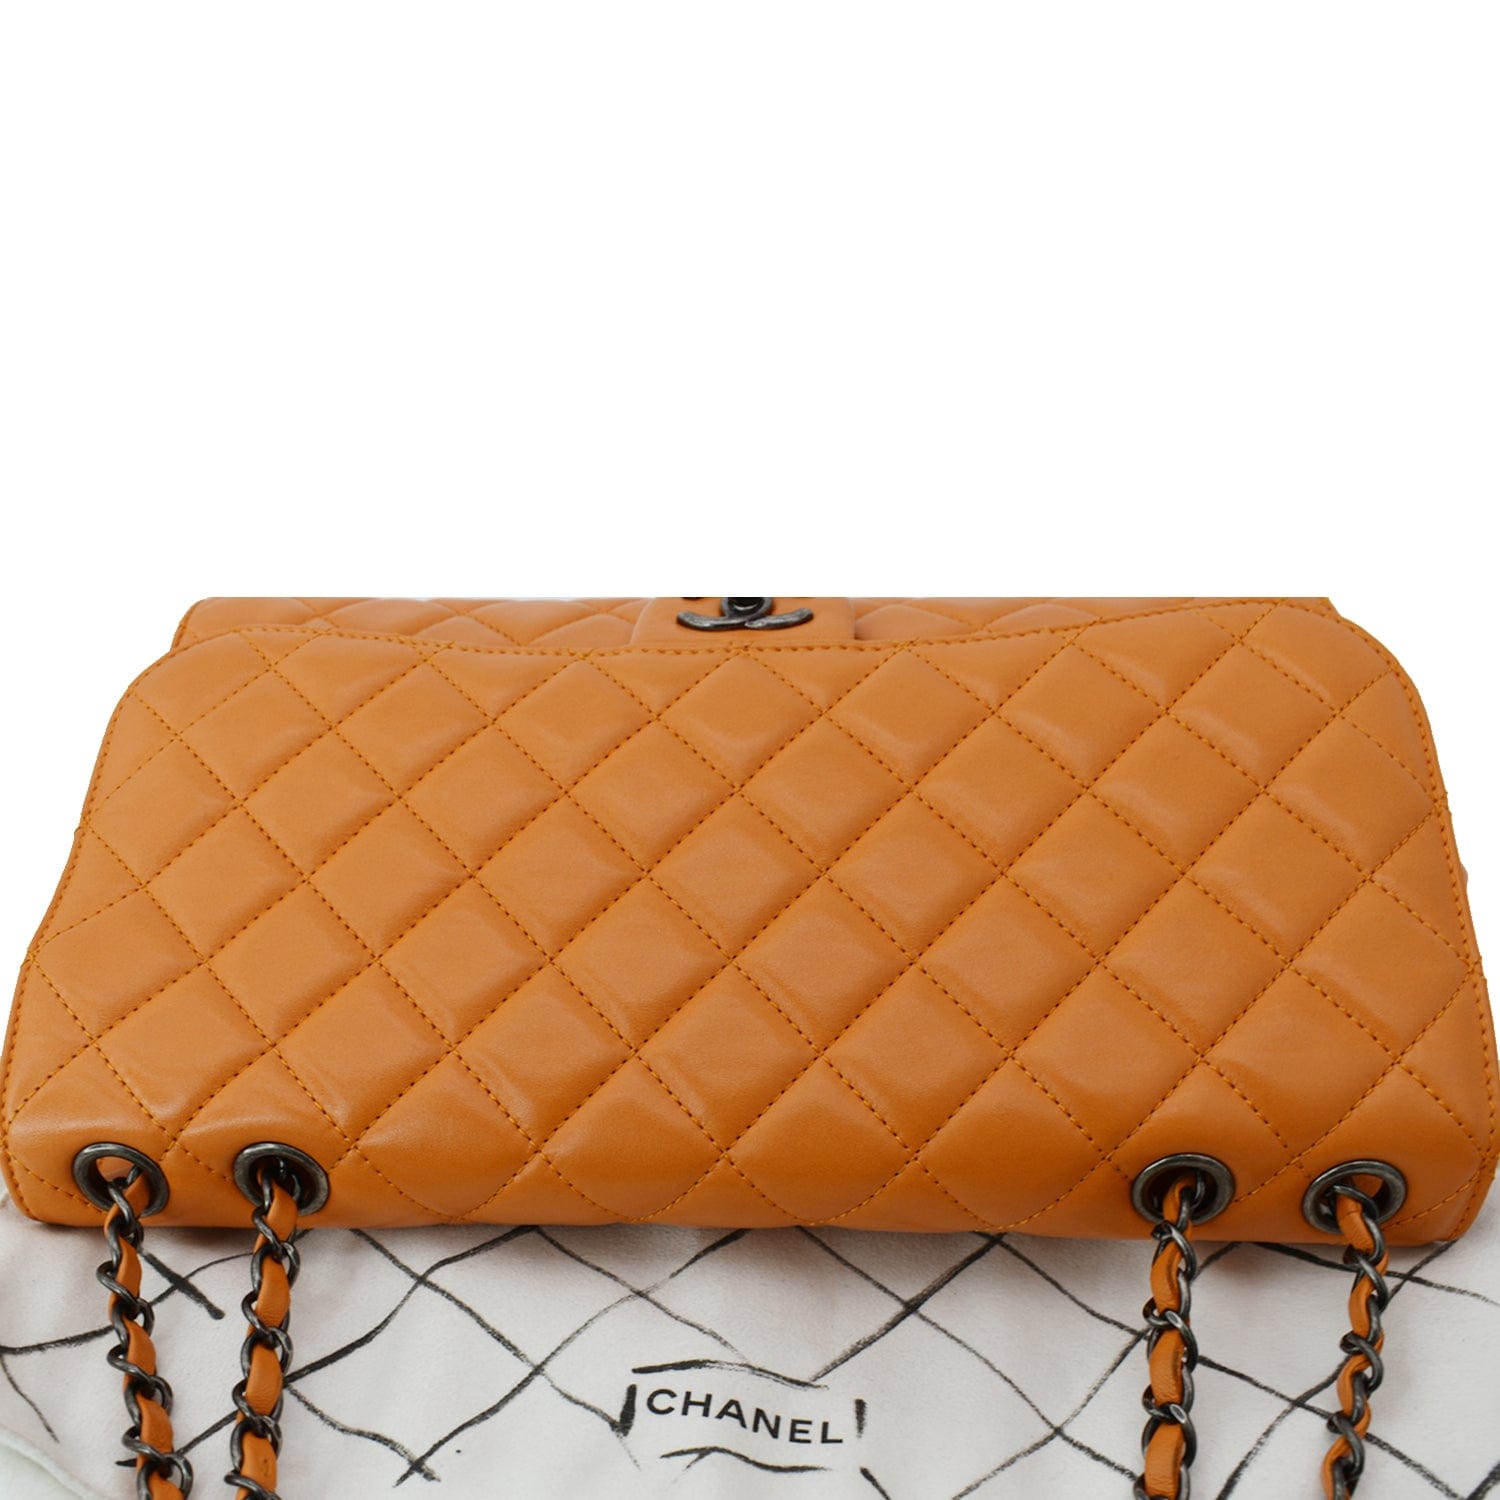 Chanel Medium Classic Patent Double Flap Orange Leather Handbag